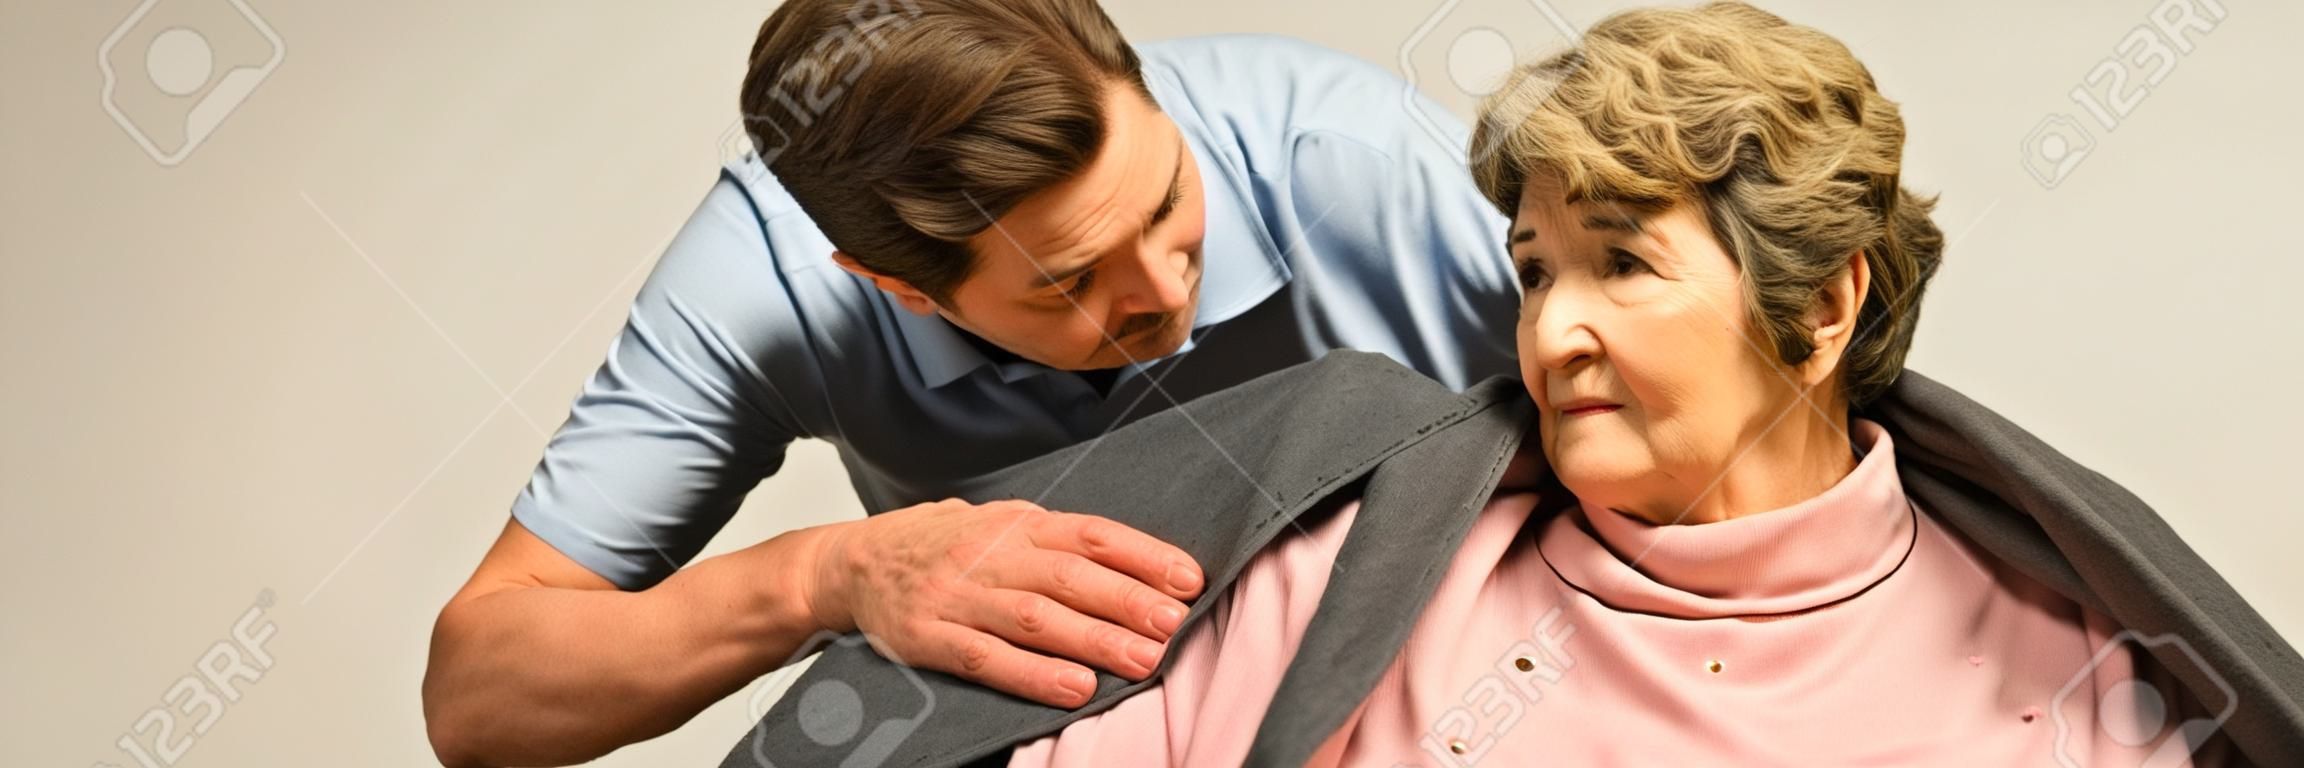 Männlich hilfreich Betreuer kümmert sich um ältere Frau